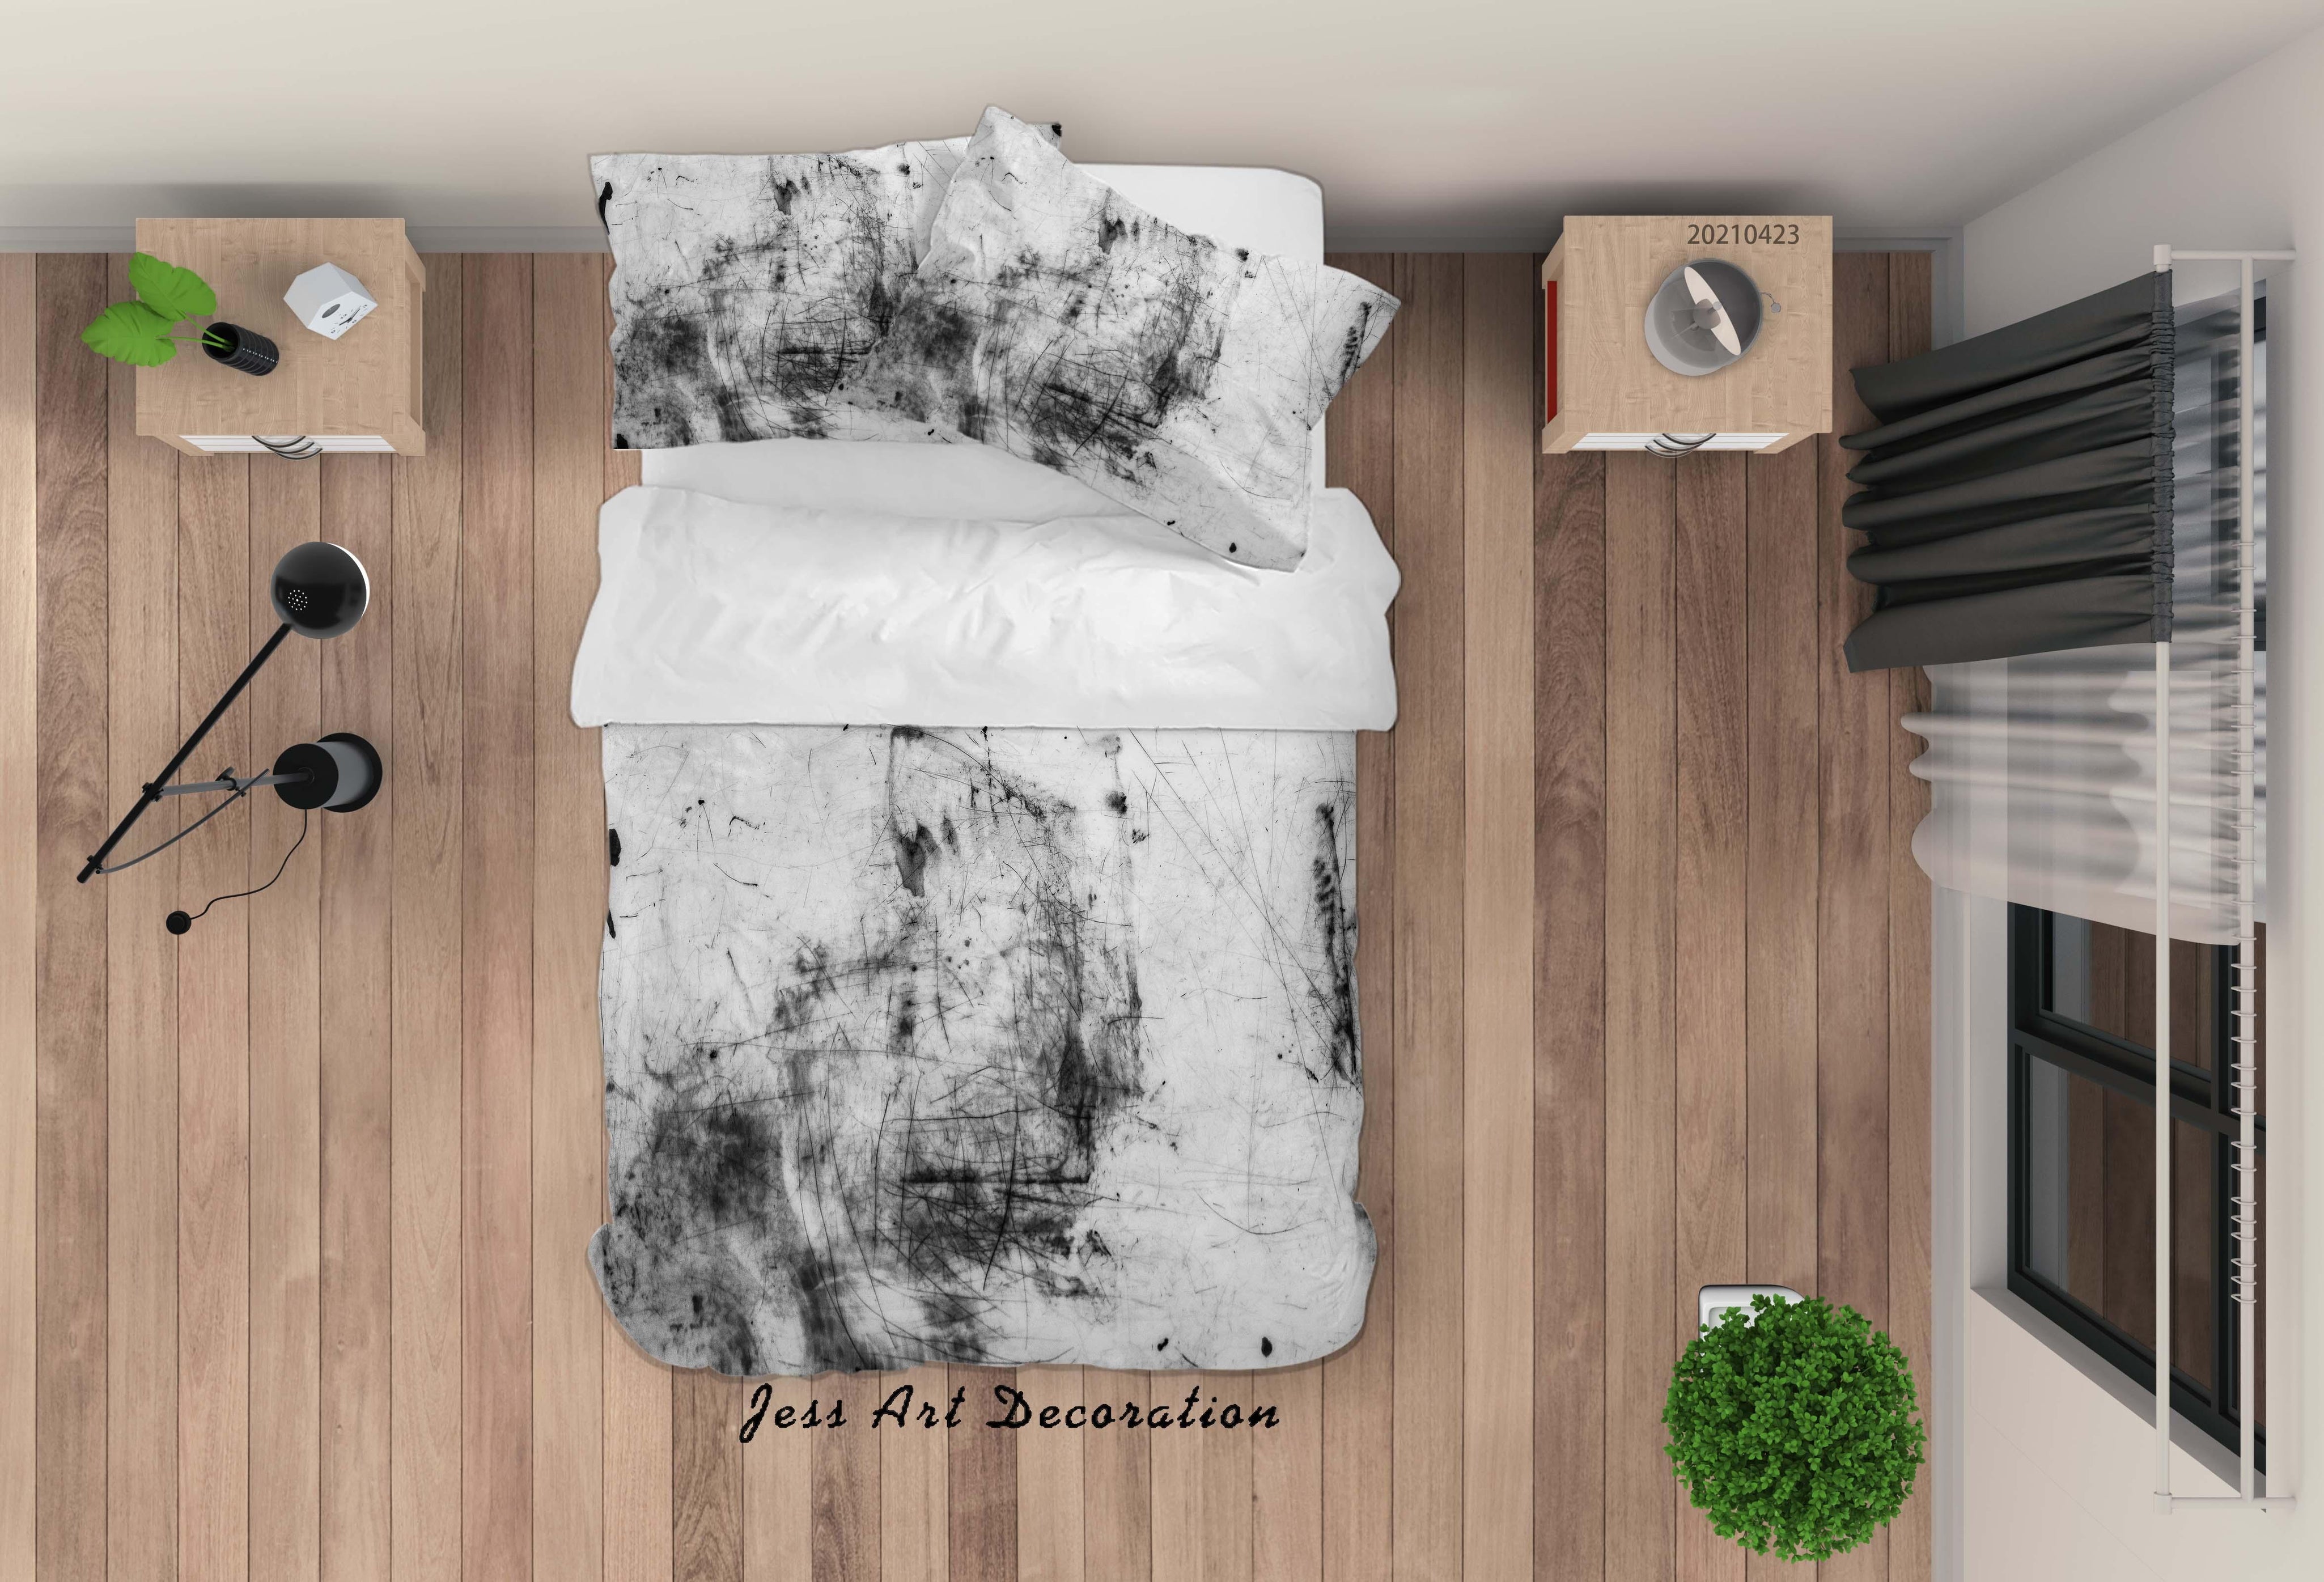 3D Abstract Black Graffiti Quilt Cover Set Bedding Set Duvet Cover Pillowcases 72- Jess Art Decoration